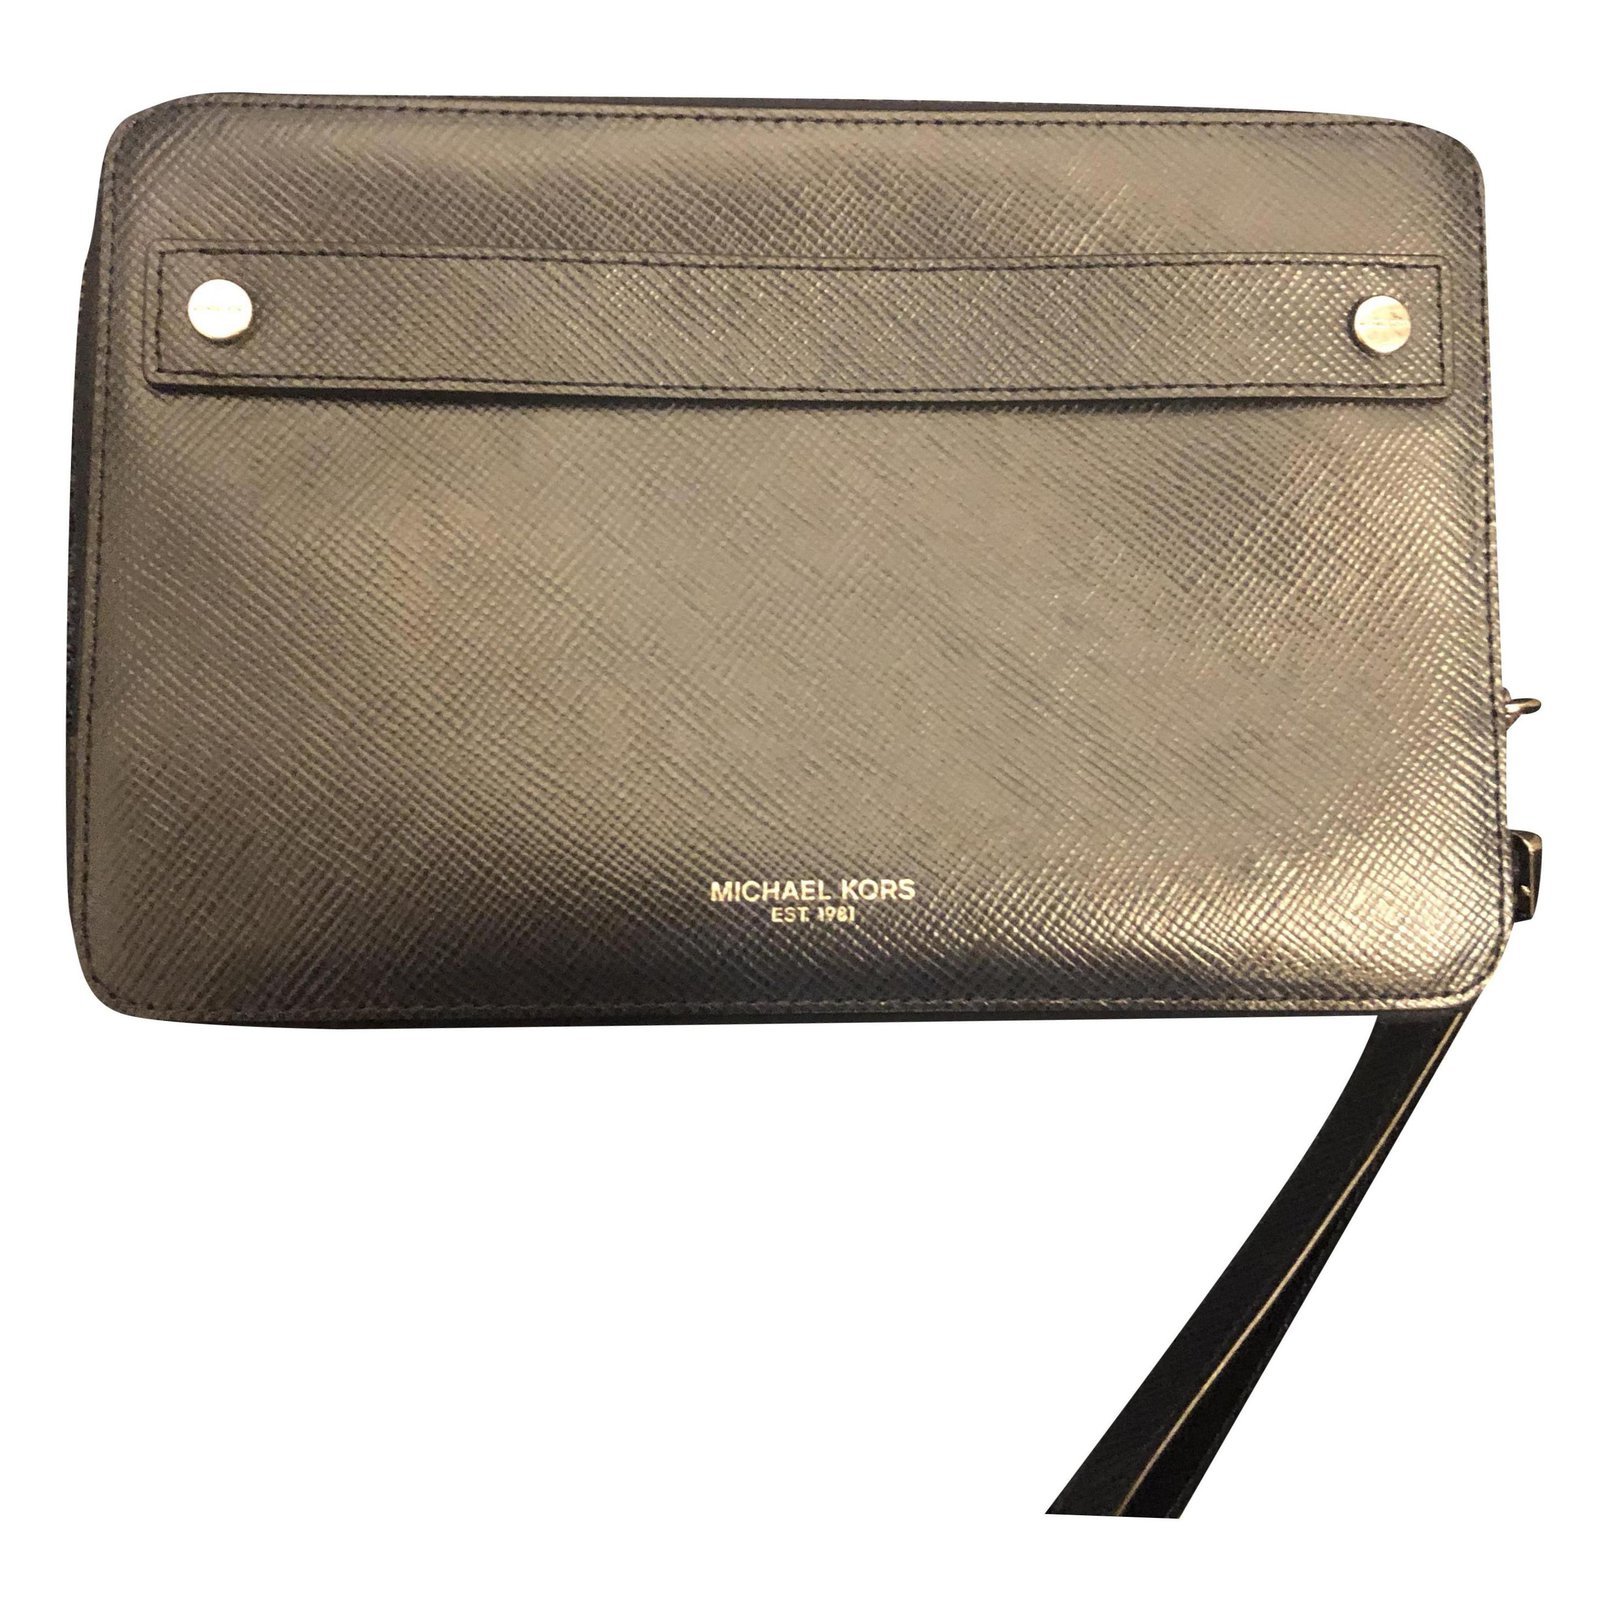 Michael Kors Leather Clutch Bag Wallets 